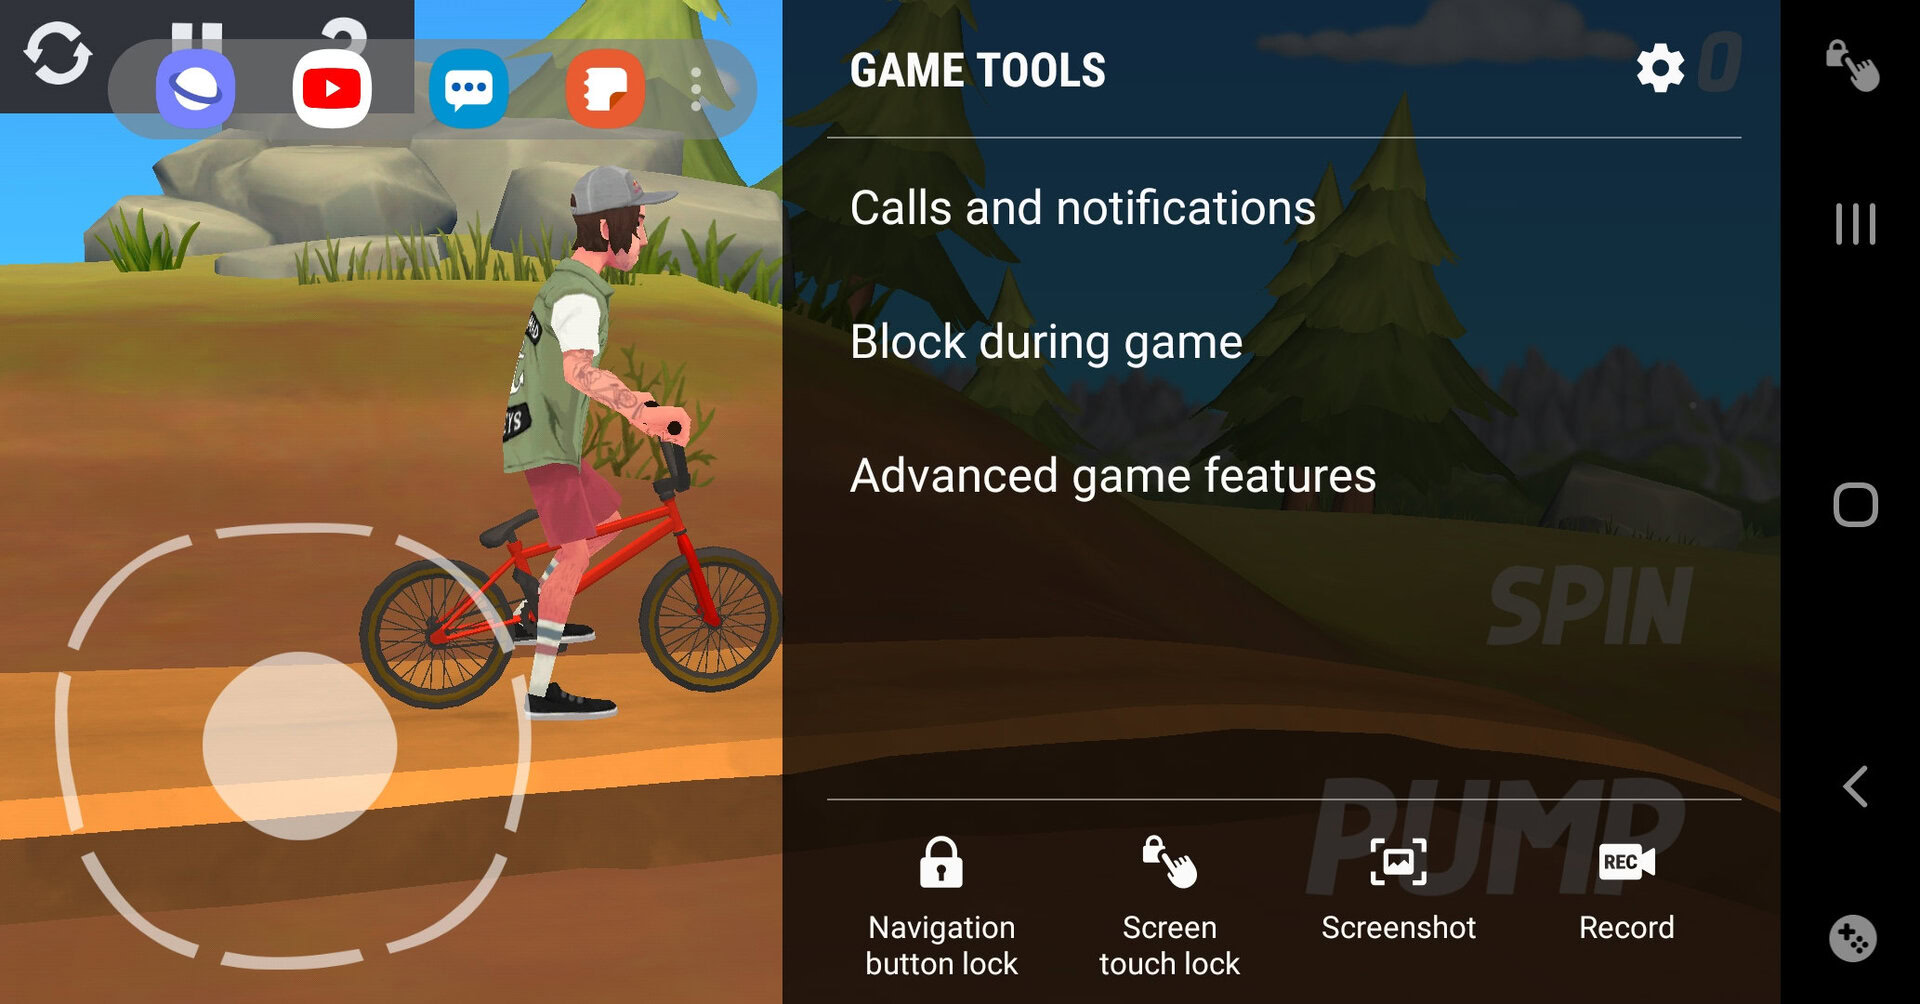 Launch game screen. Игра Tools. Игры на Samsung. Самсунг s22 для игр. Game Tools Launcher.